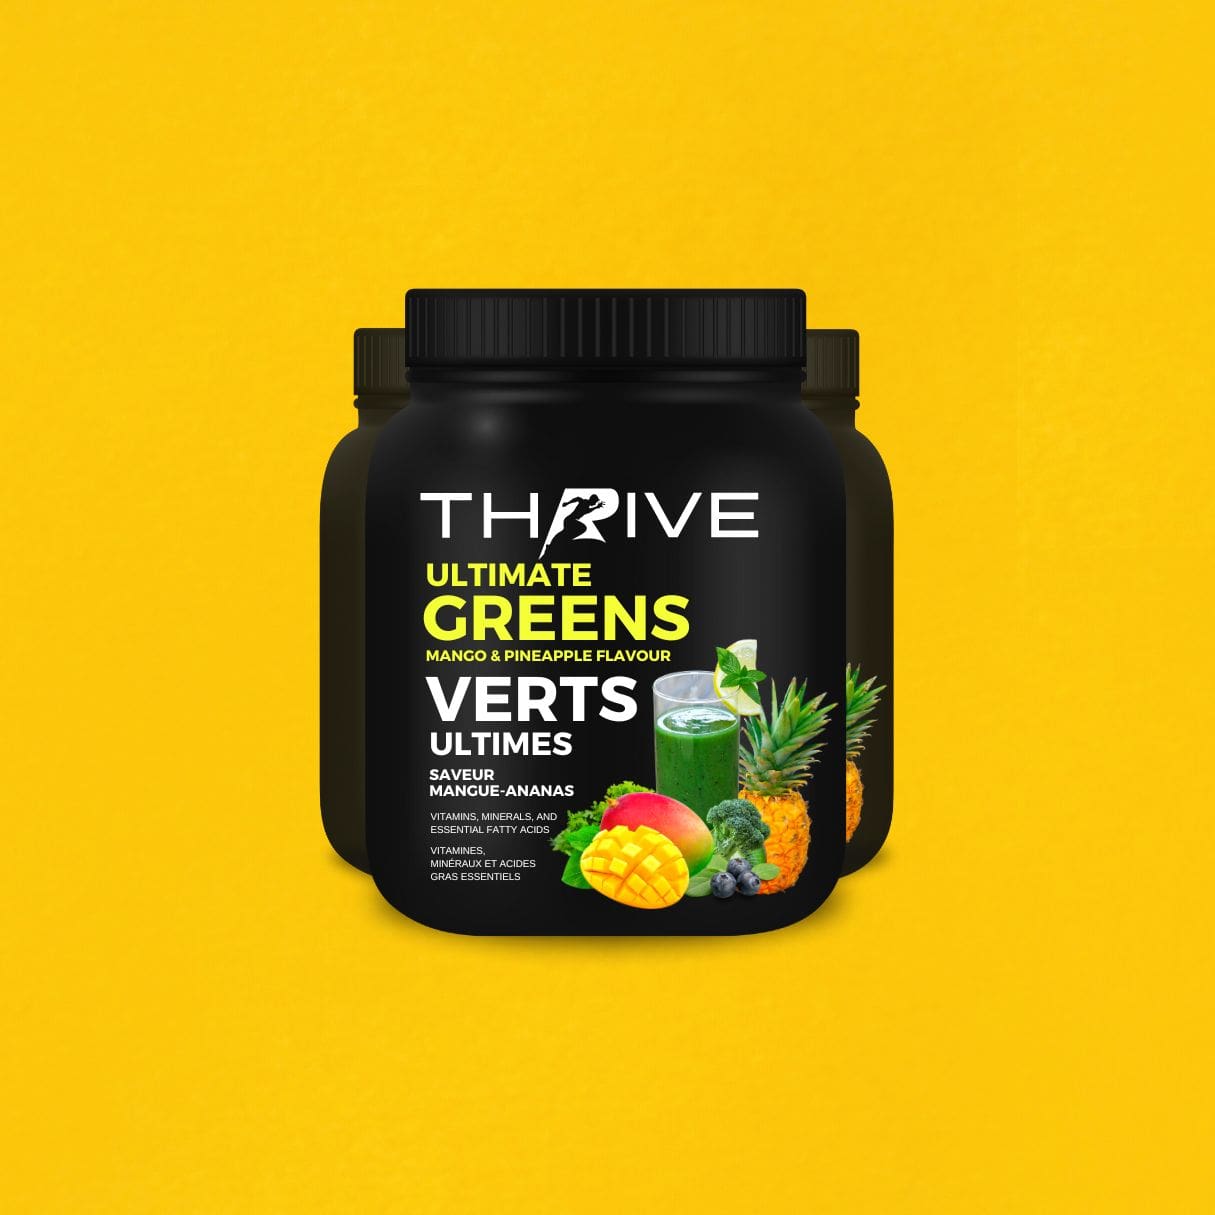 Thrive Ultimate Greens Mango & Pineapple (3 pack)